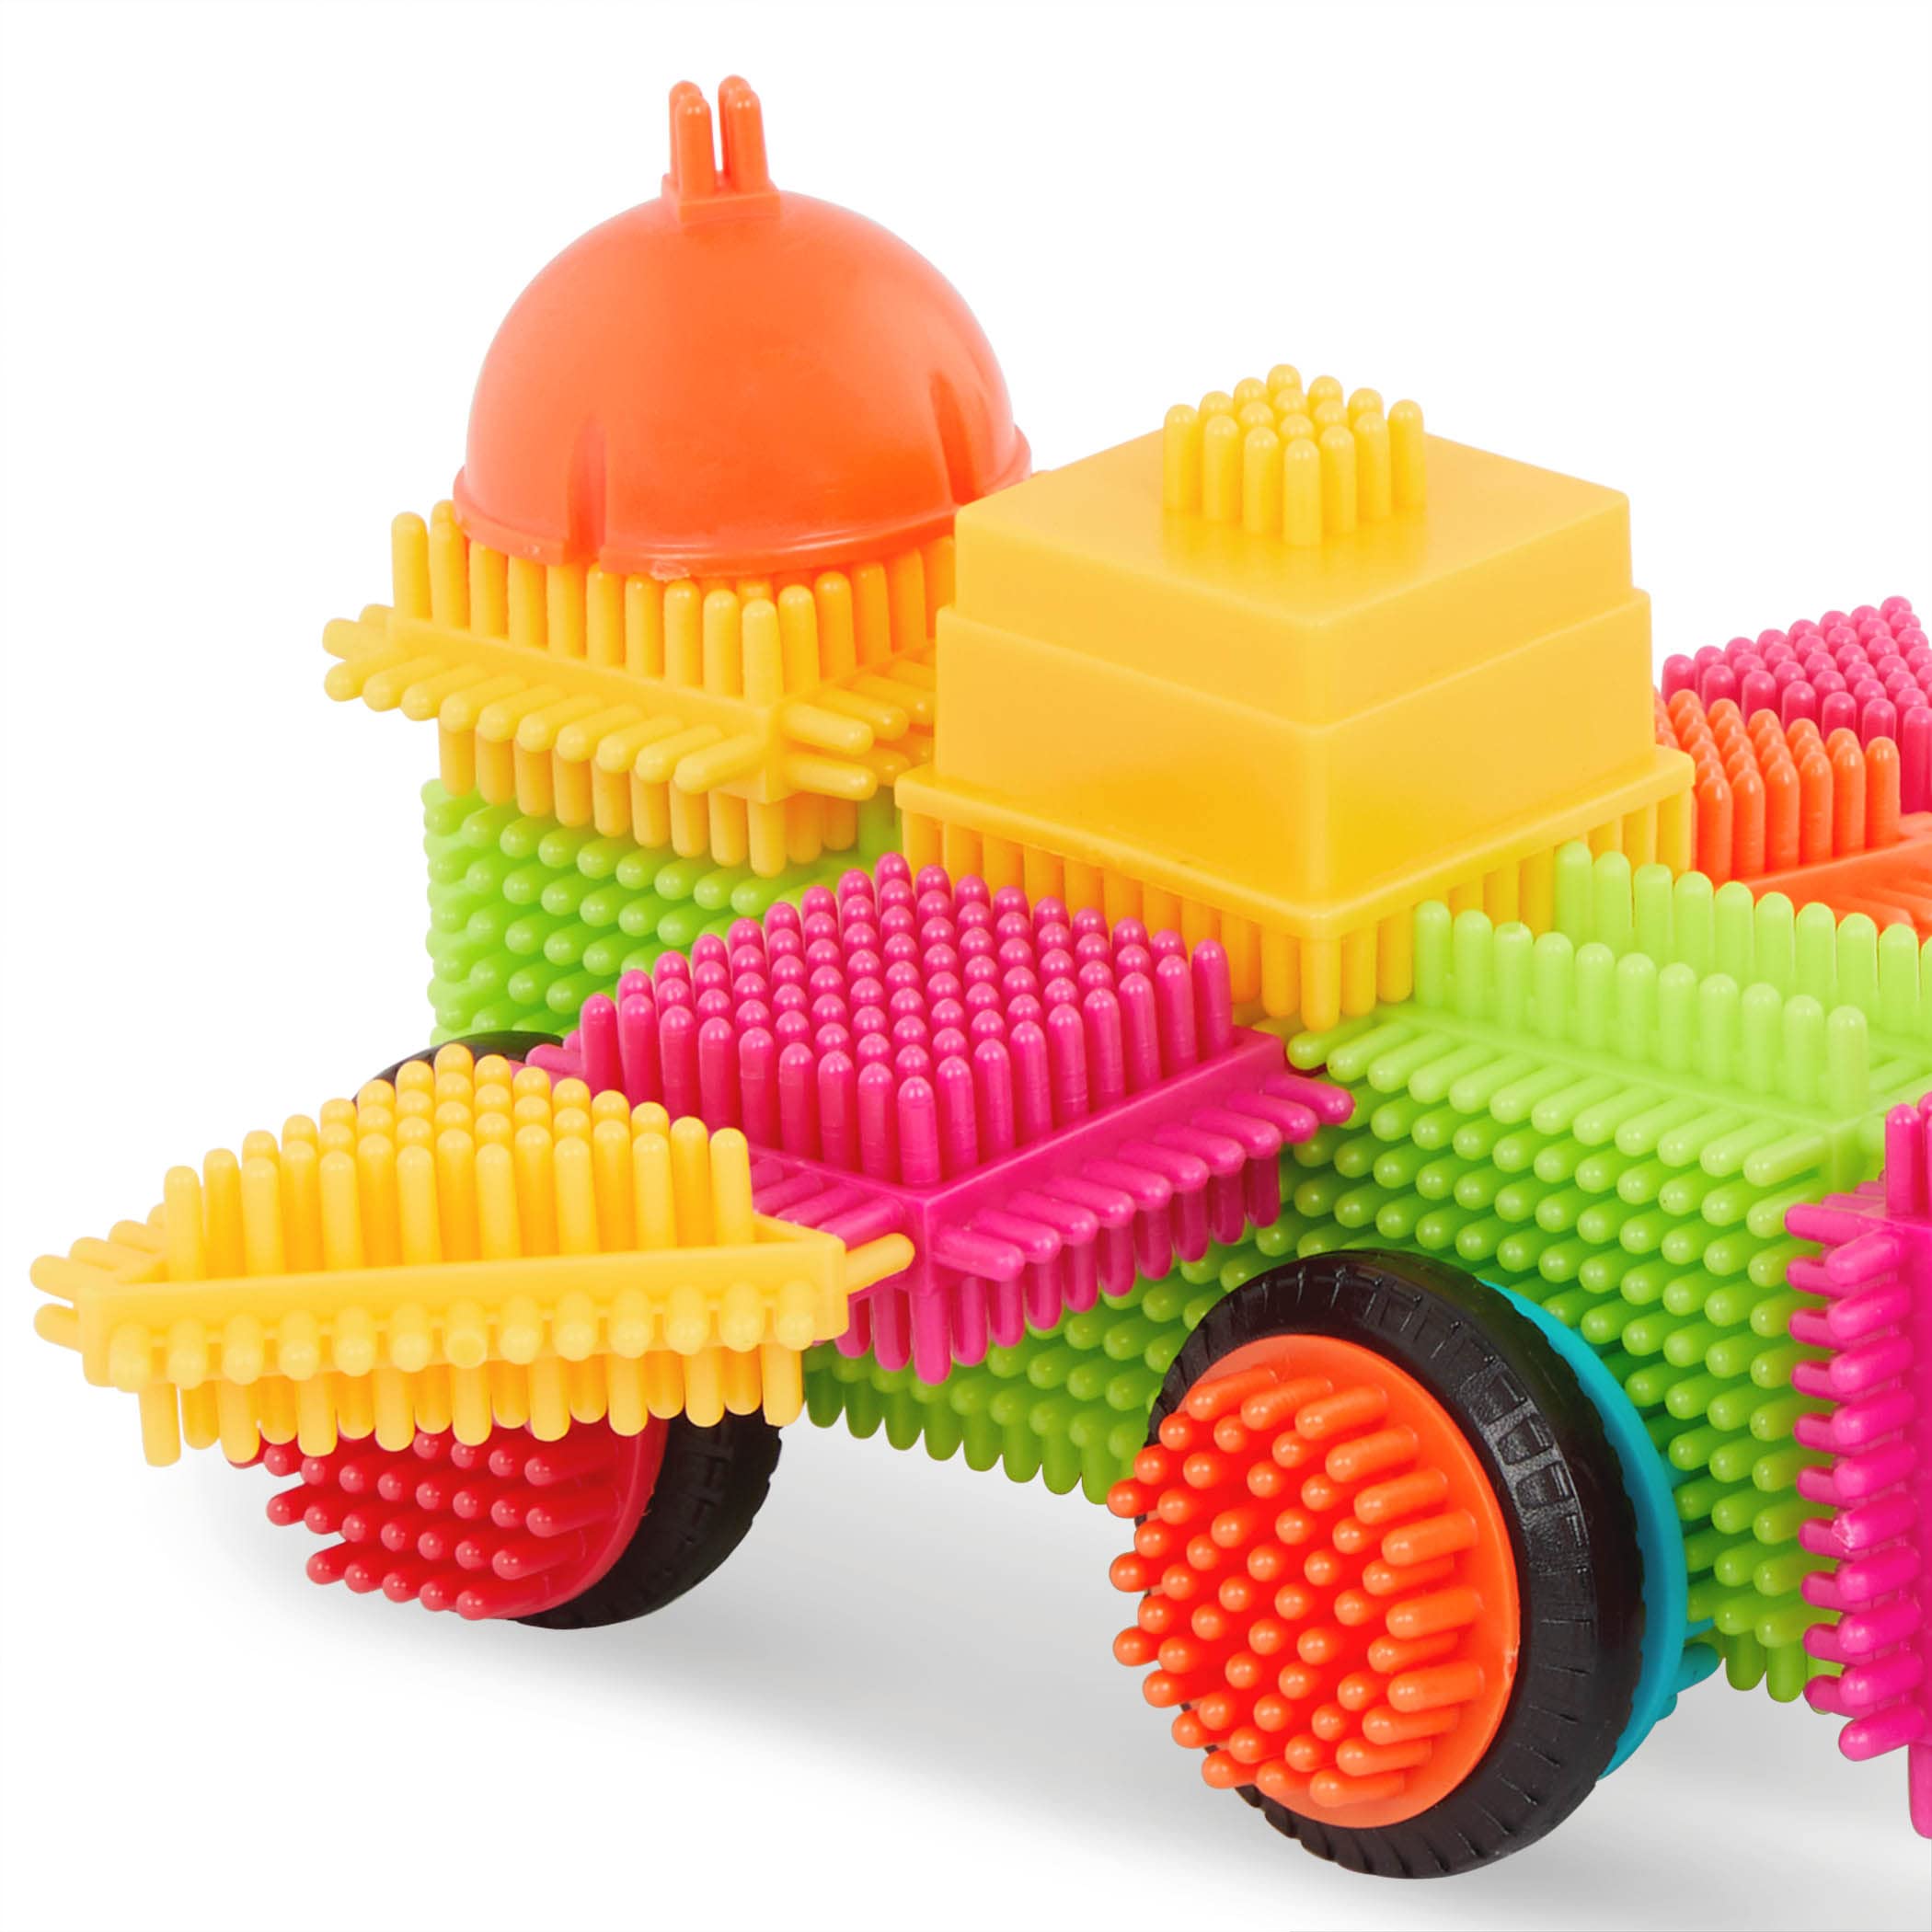 Bristle Blocks by Battat – The Official Bristle Blocks – STEM 3D Sensory Toy for Kids – Building Toys for Creativity & Dexterity – 2 Yrs, Multicolor, 80 Pieces Big Value In A Storage Bin